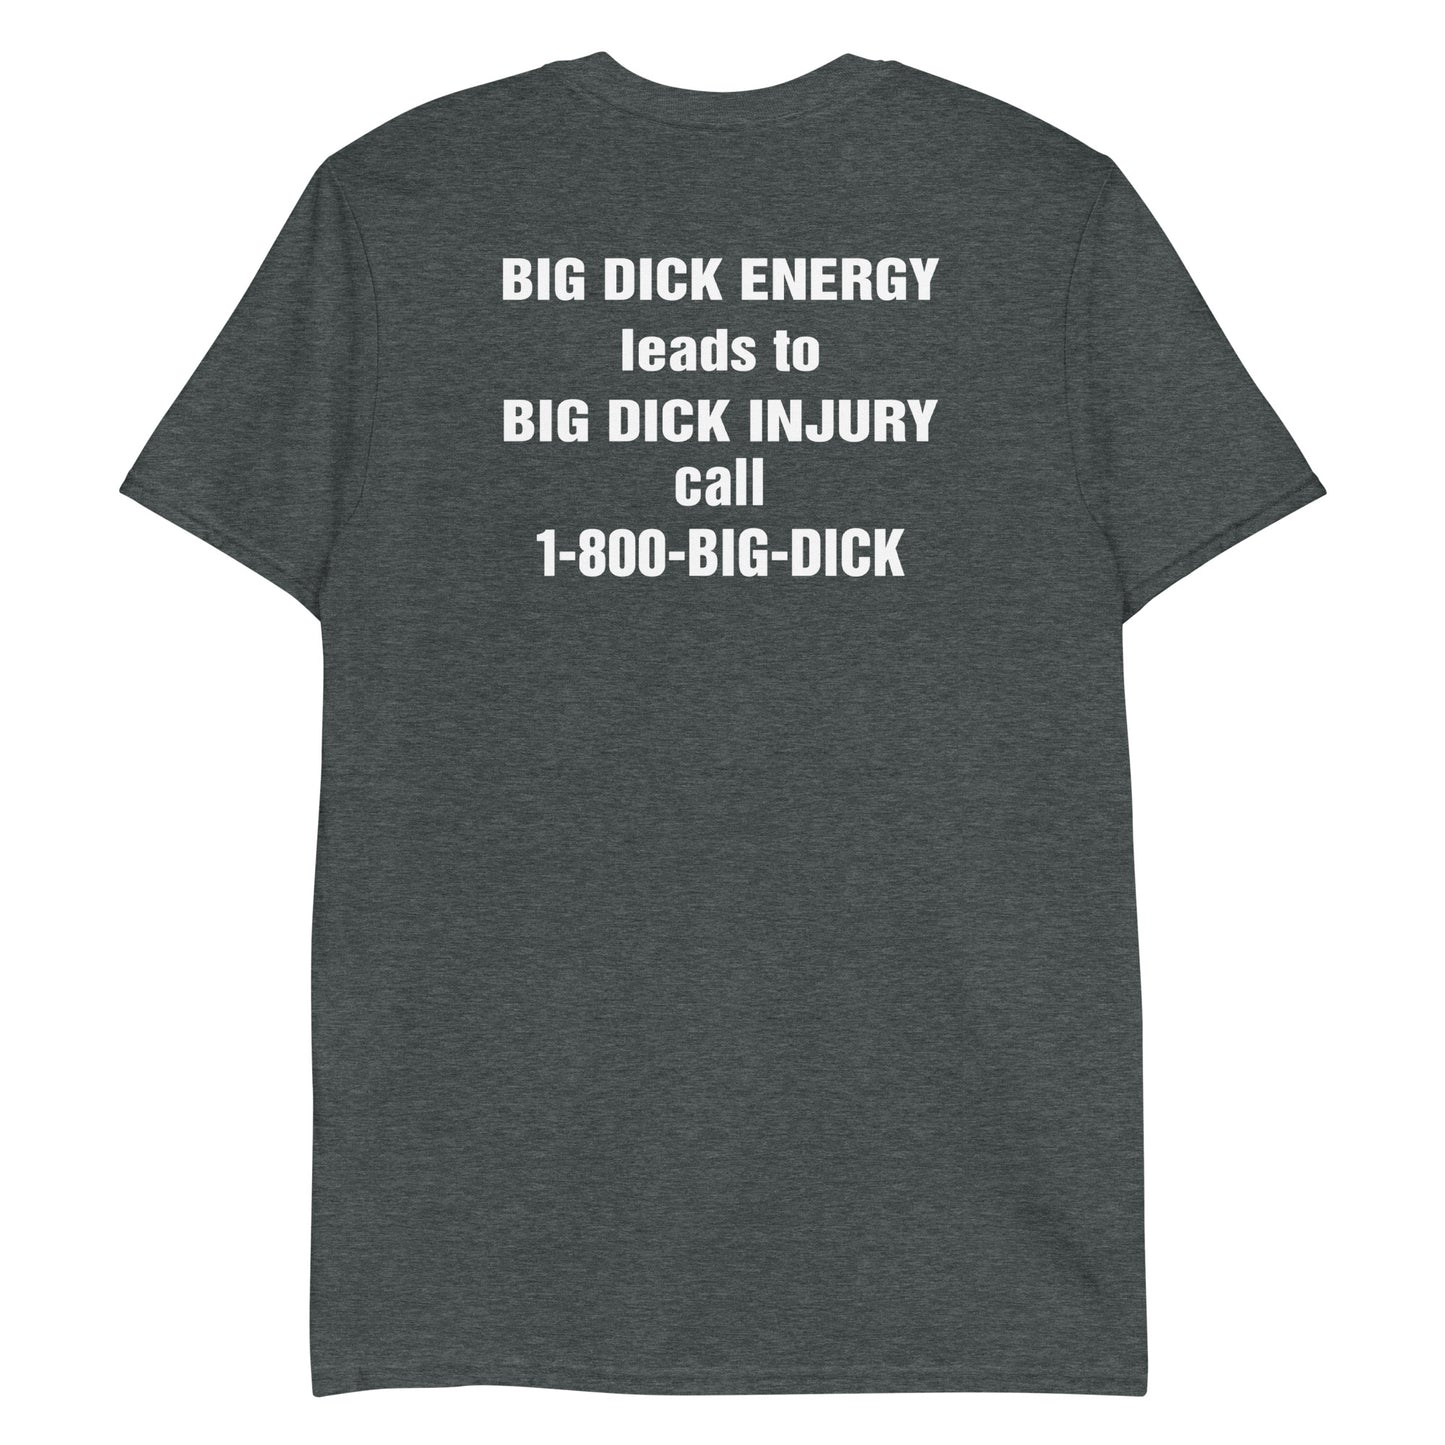 BIG DICK ENERGY leads to BIG DICK INJURY call 1-800-BIG-DICK.